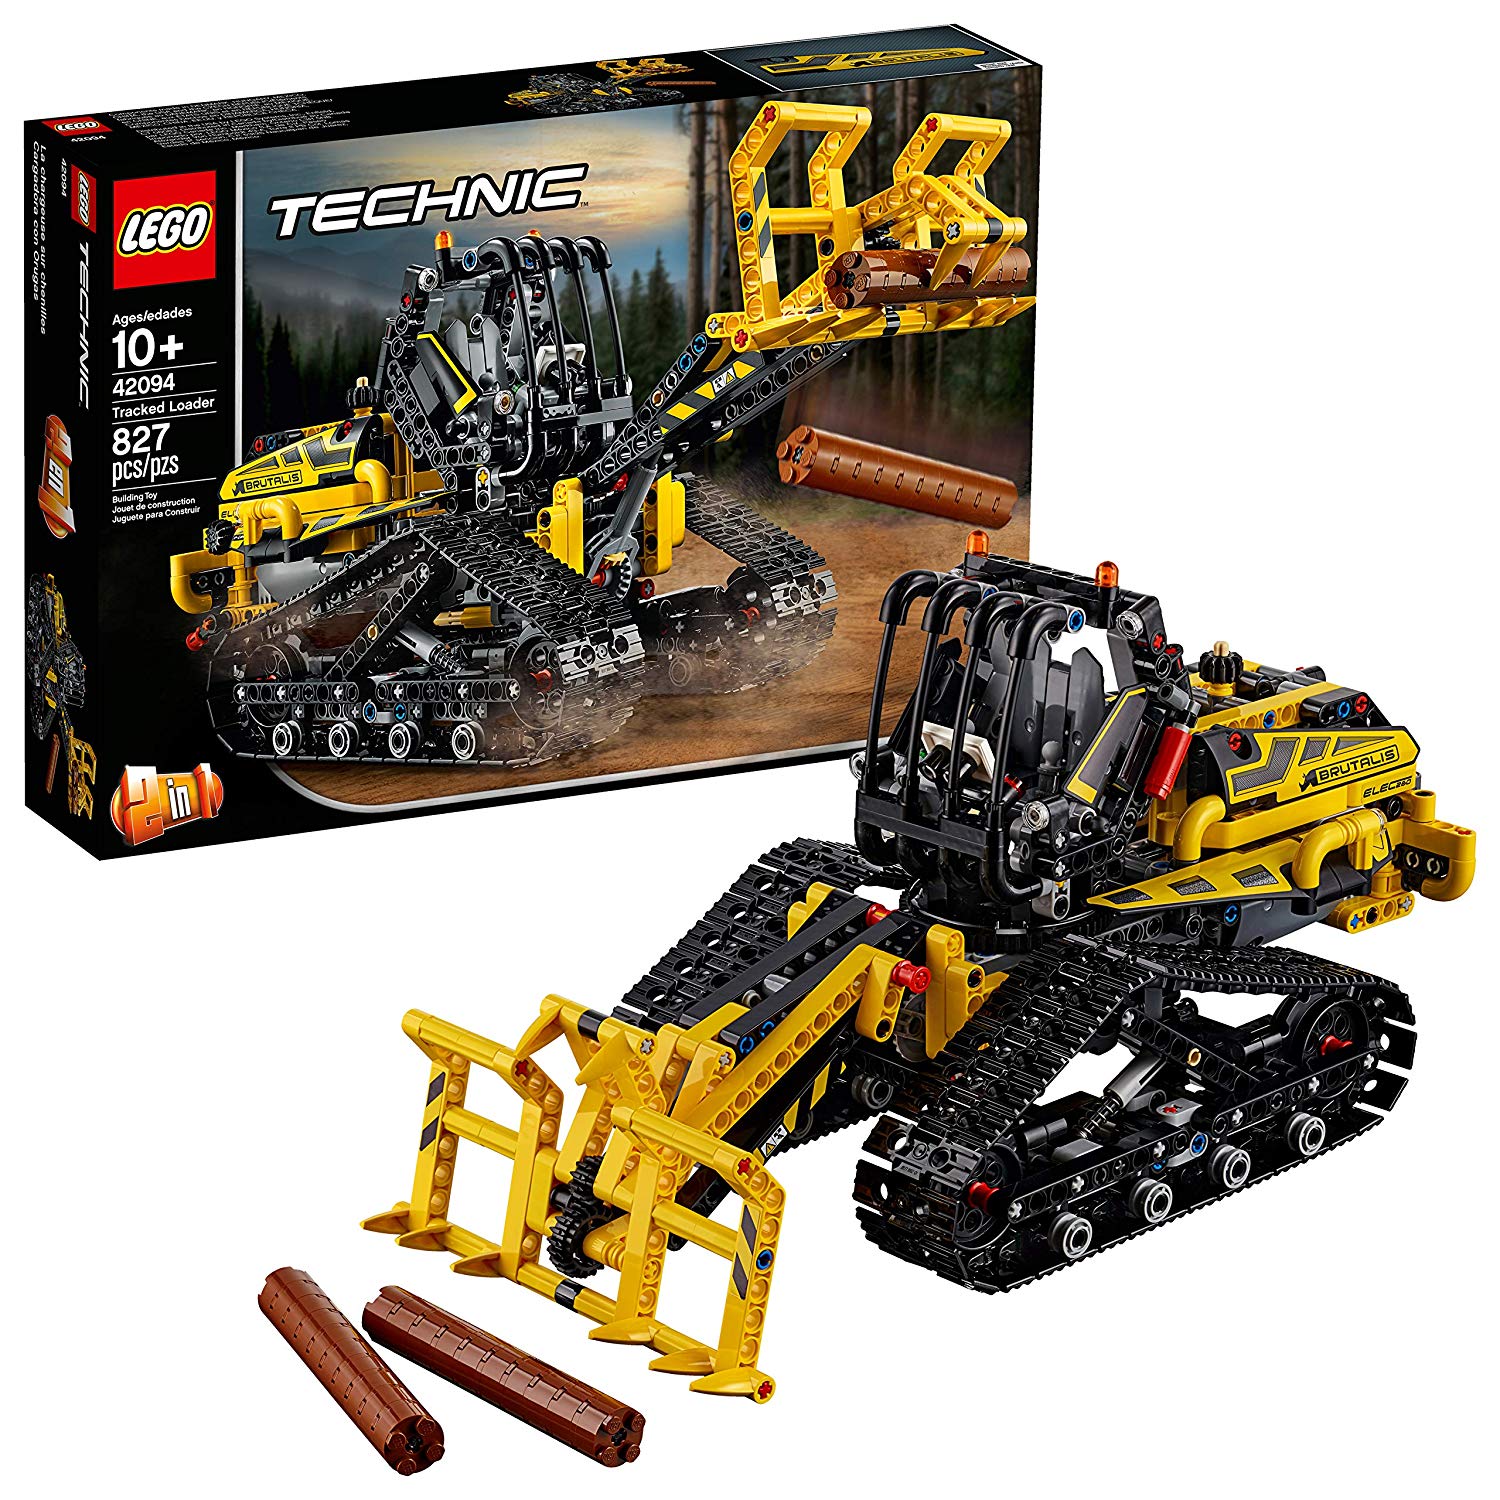 Technic Lego 42094 Construction Set New 2019 (827 Pieces)